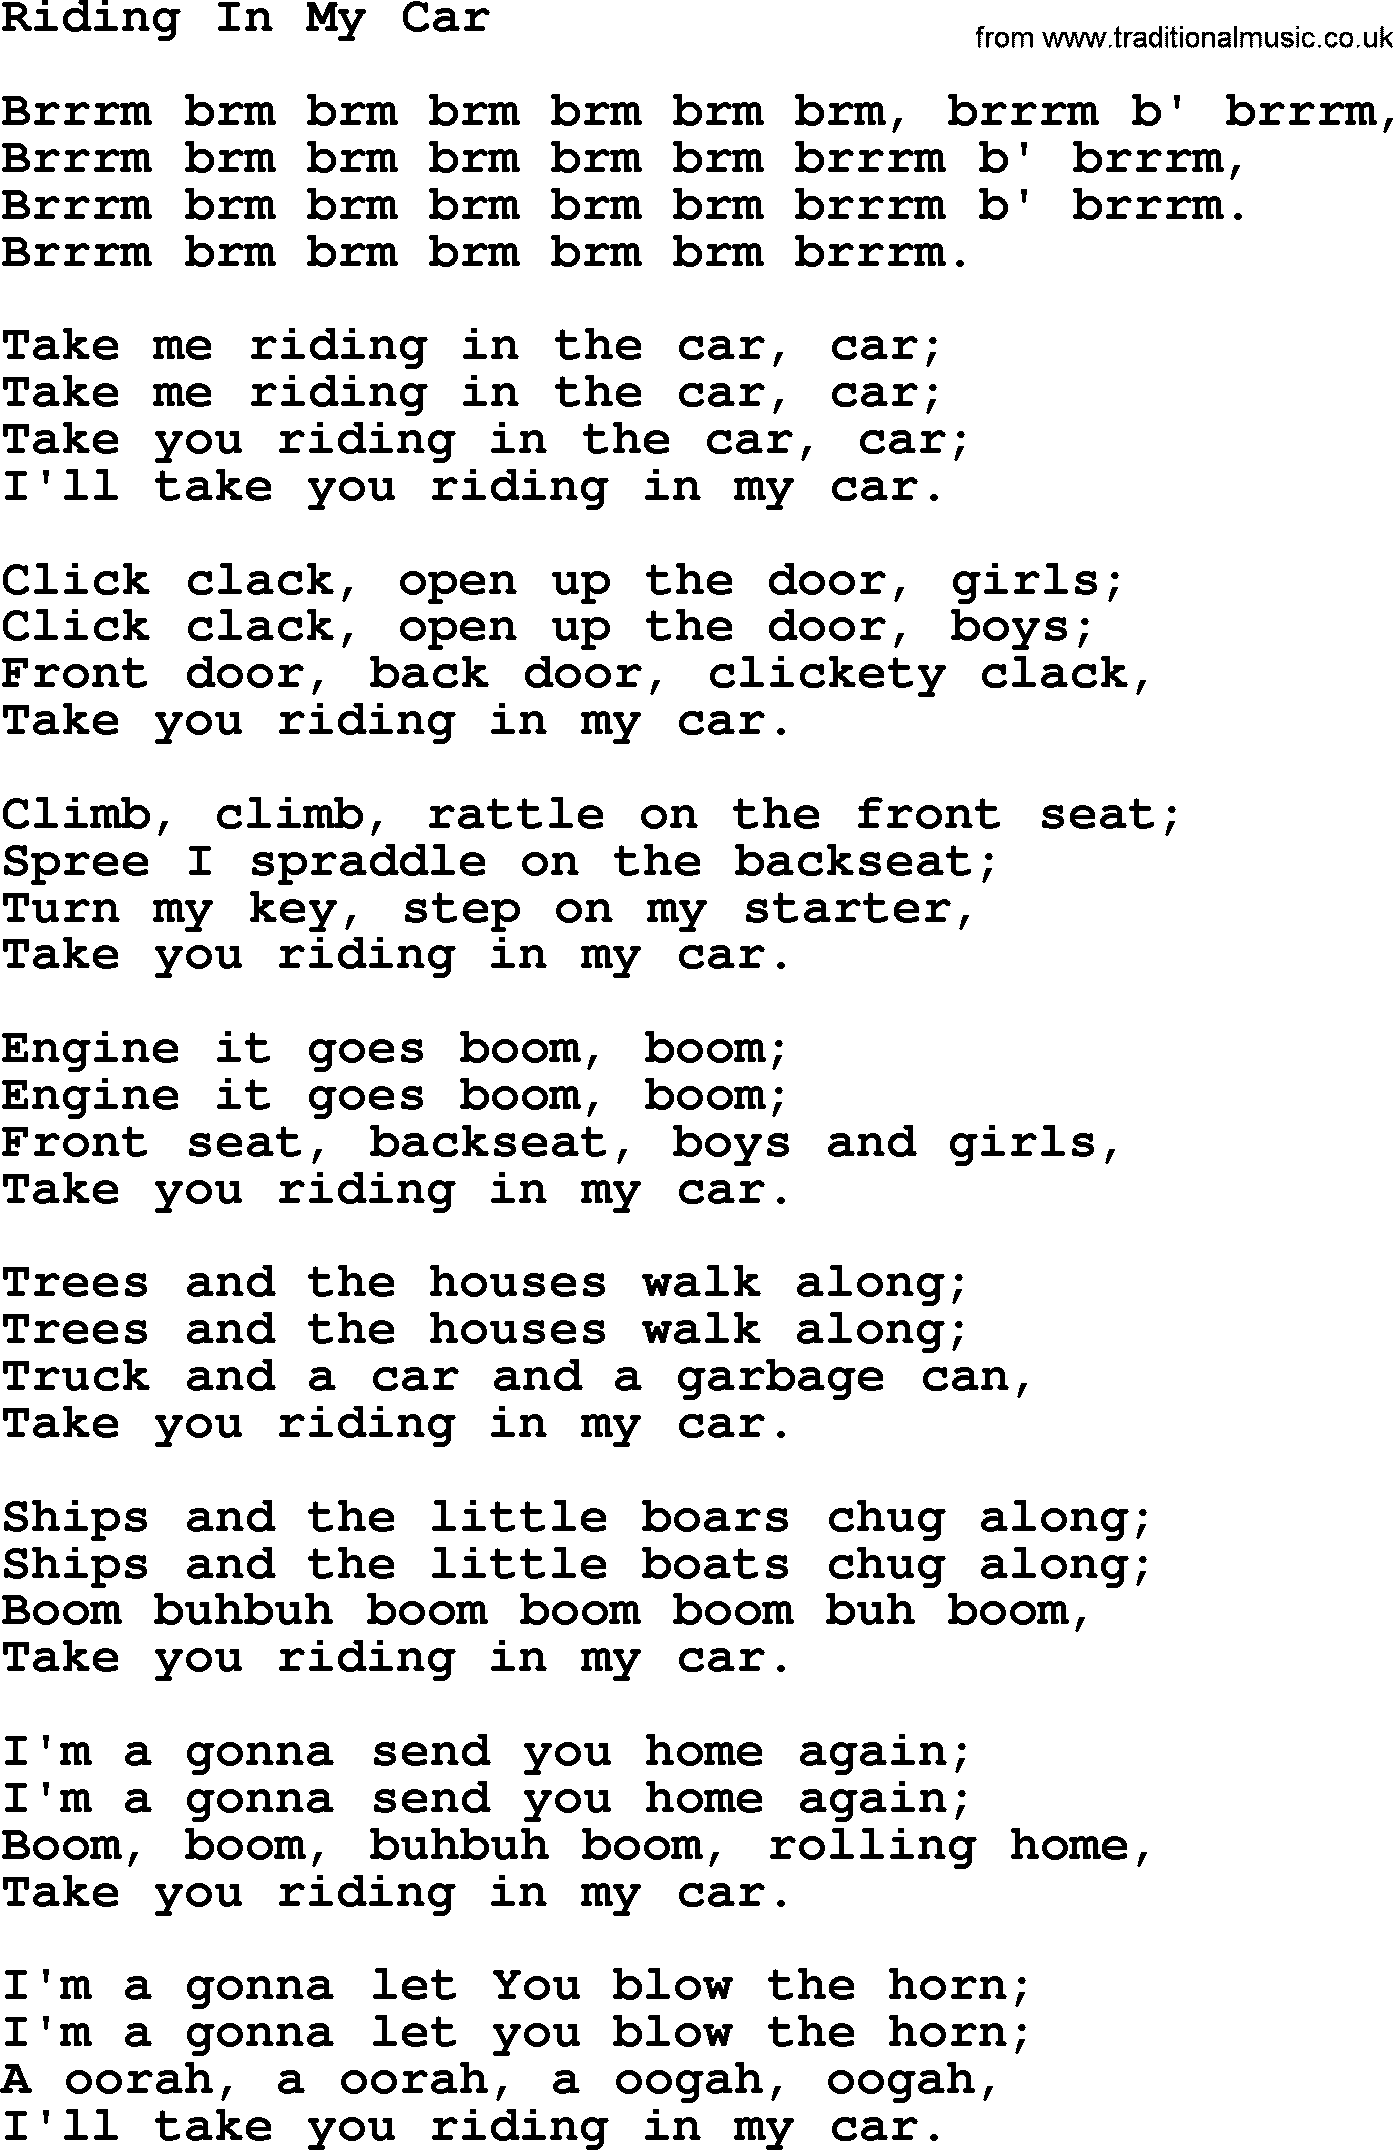 Woody Guthrie song Riding In My Car lyrics